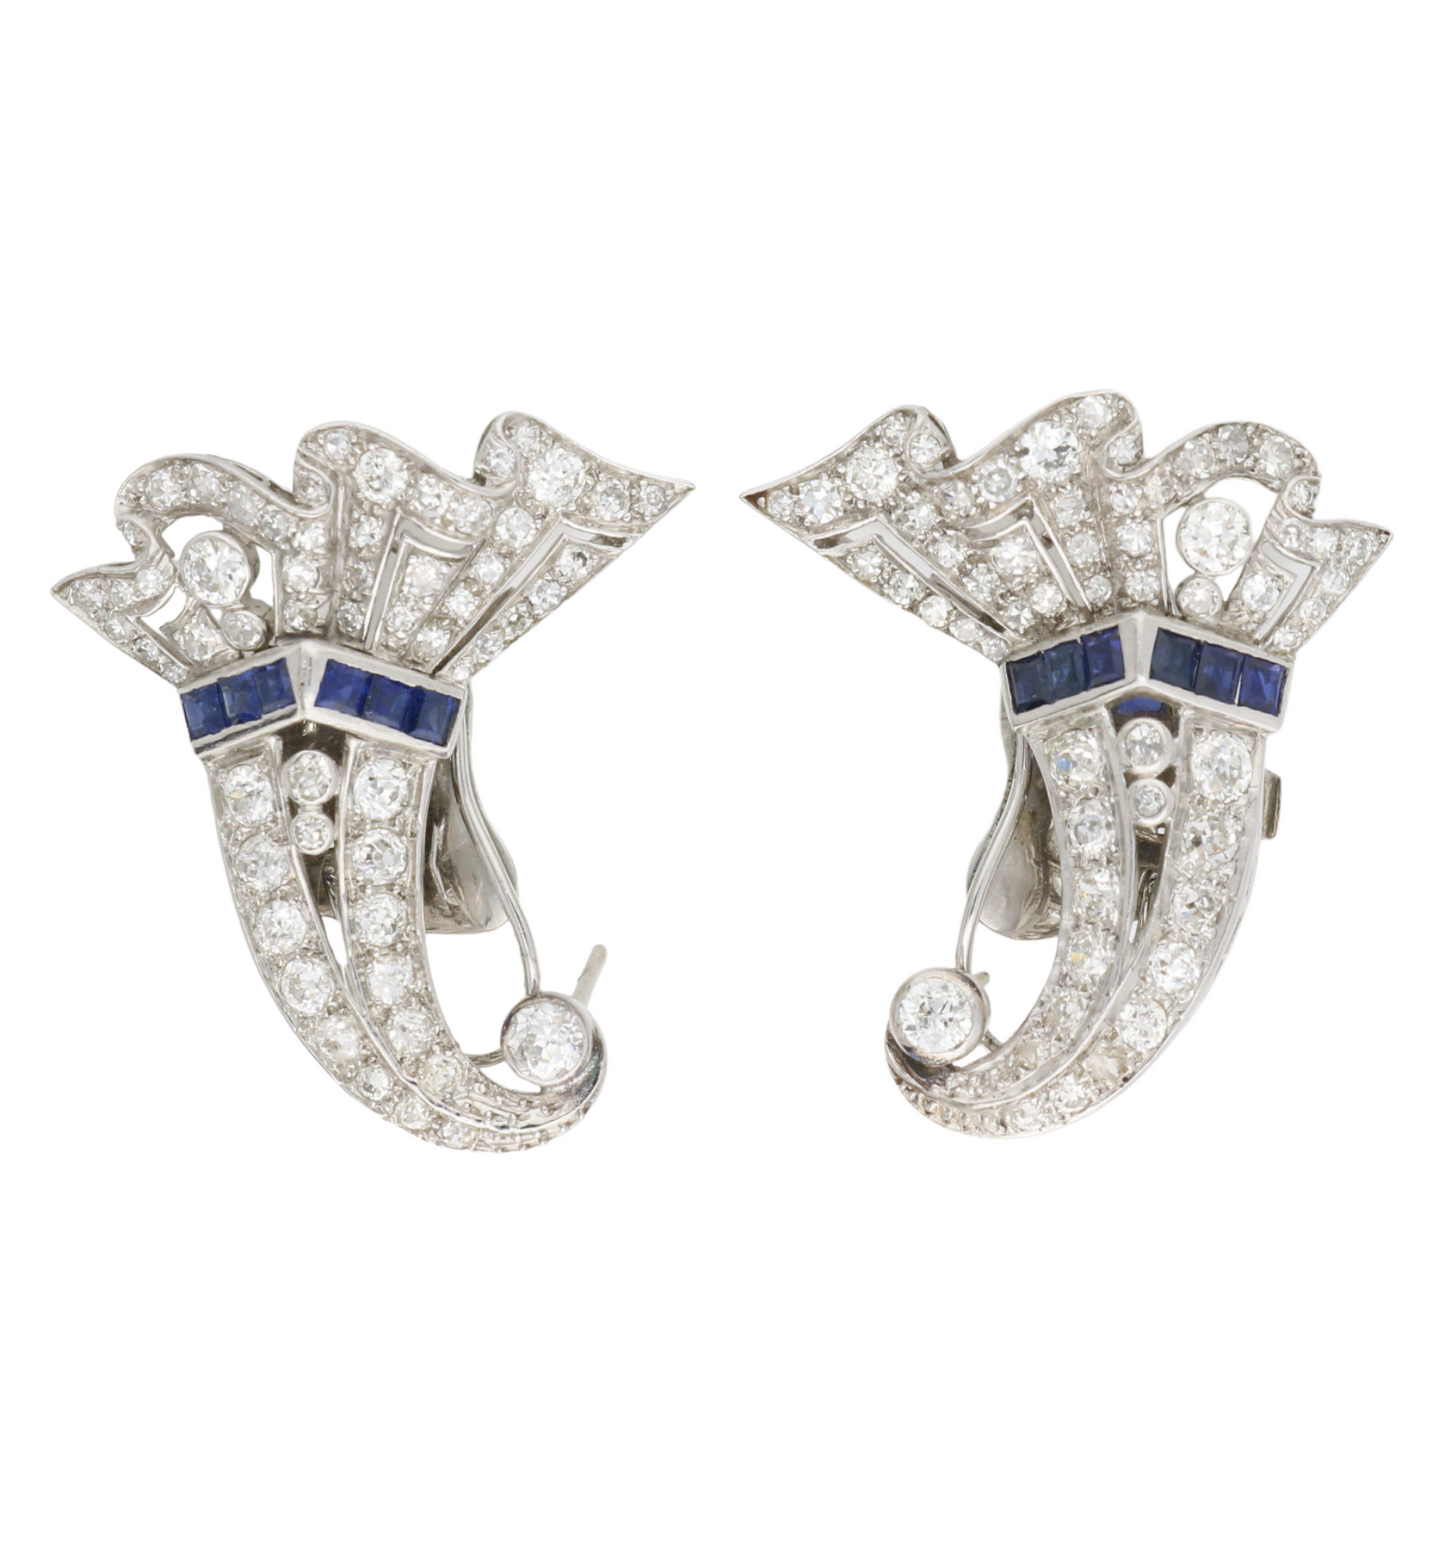 Sapphire and diamond Art Deco style earrings